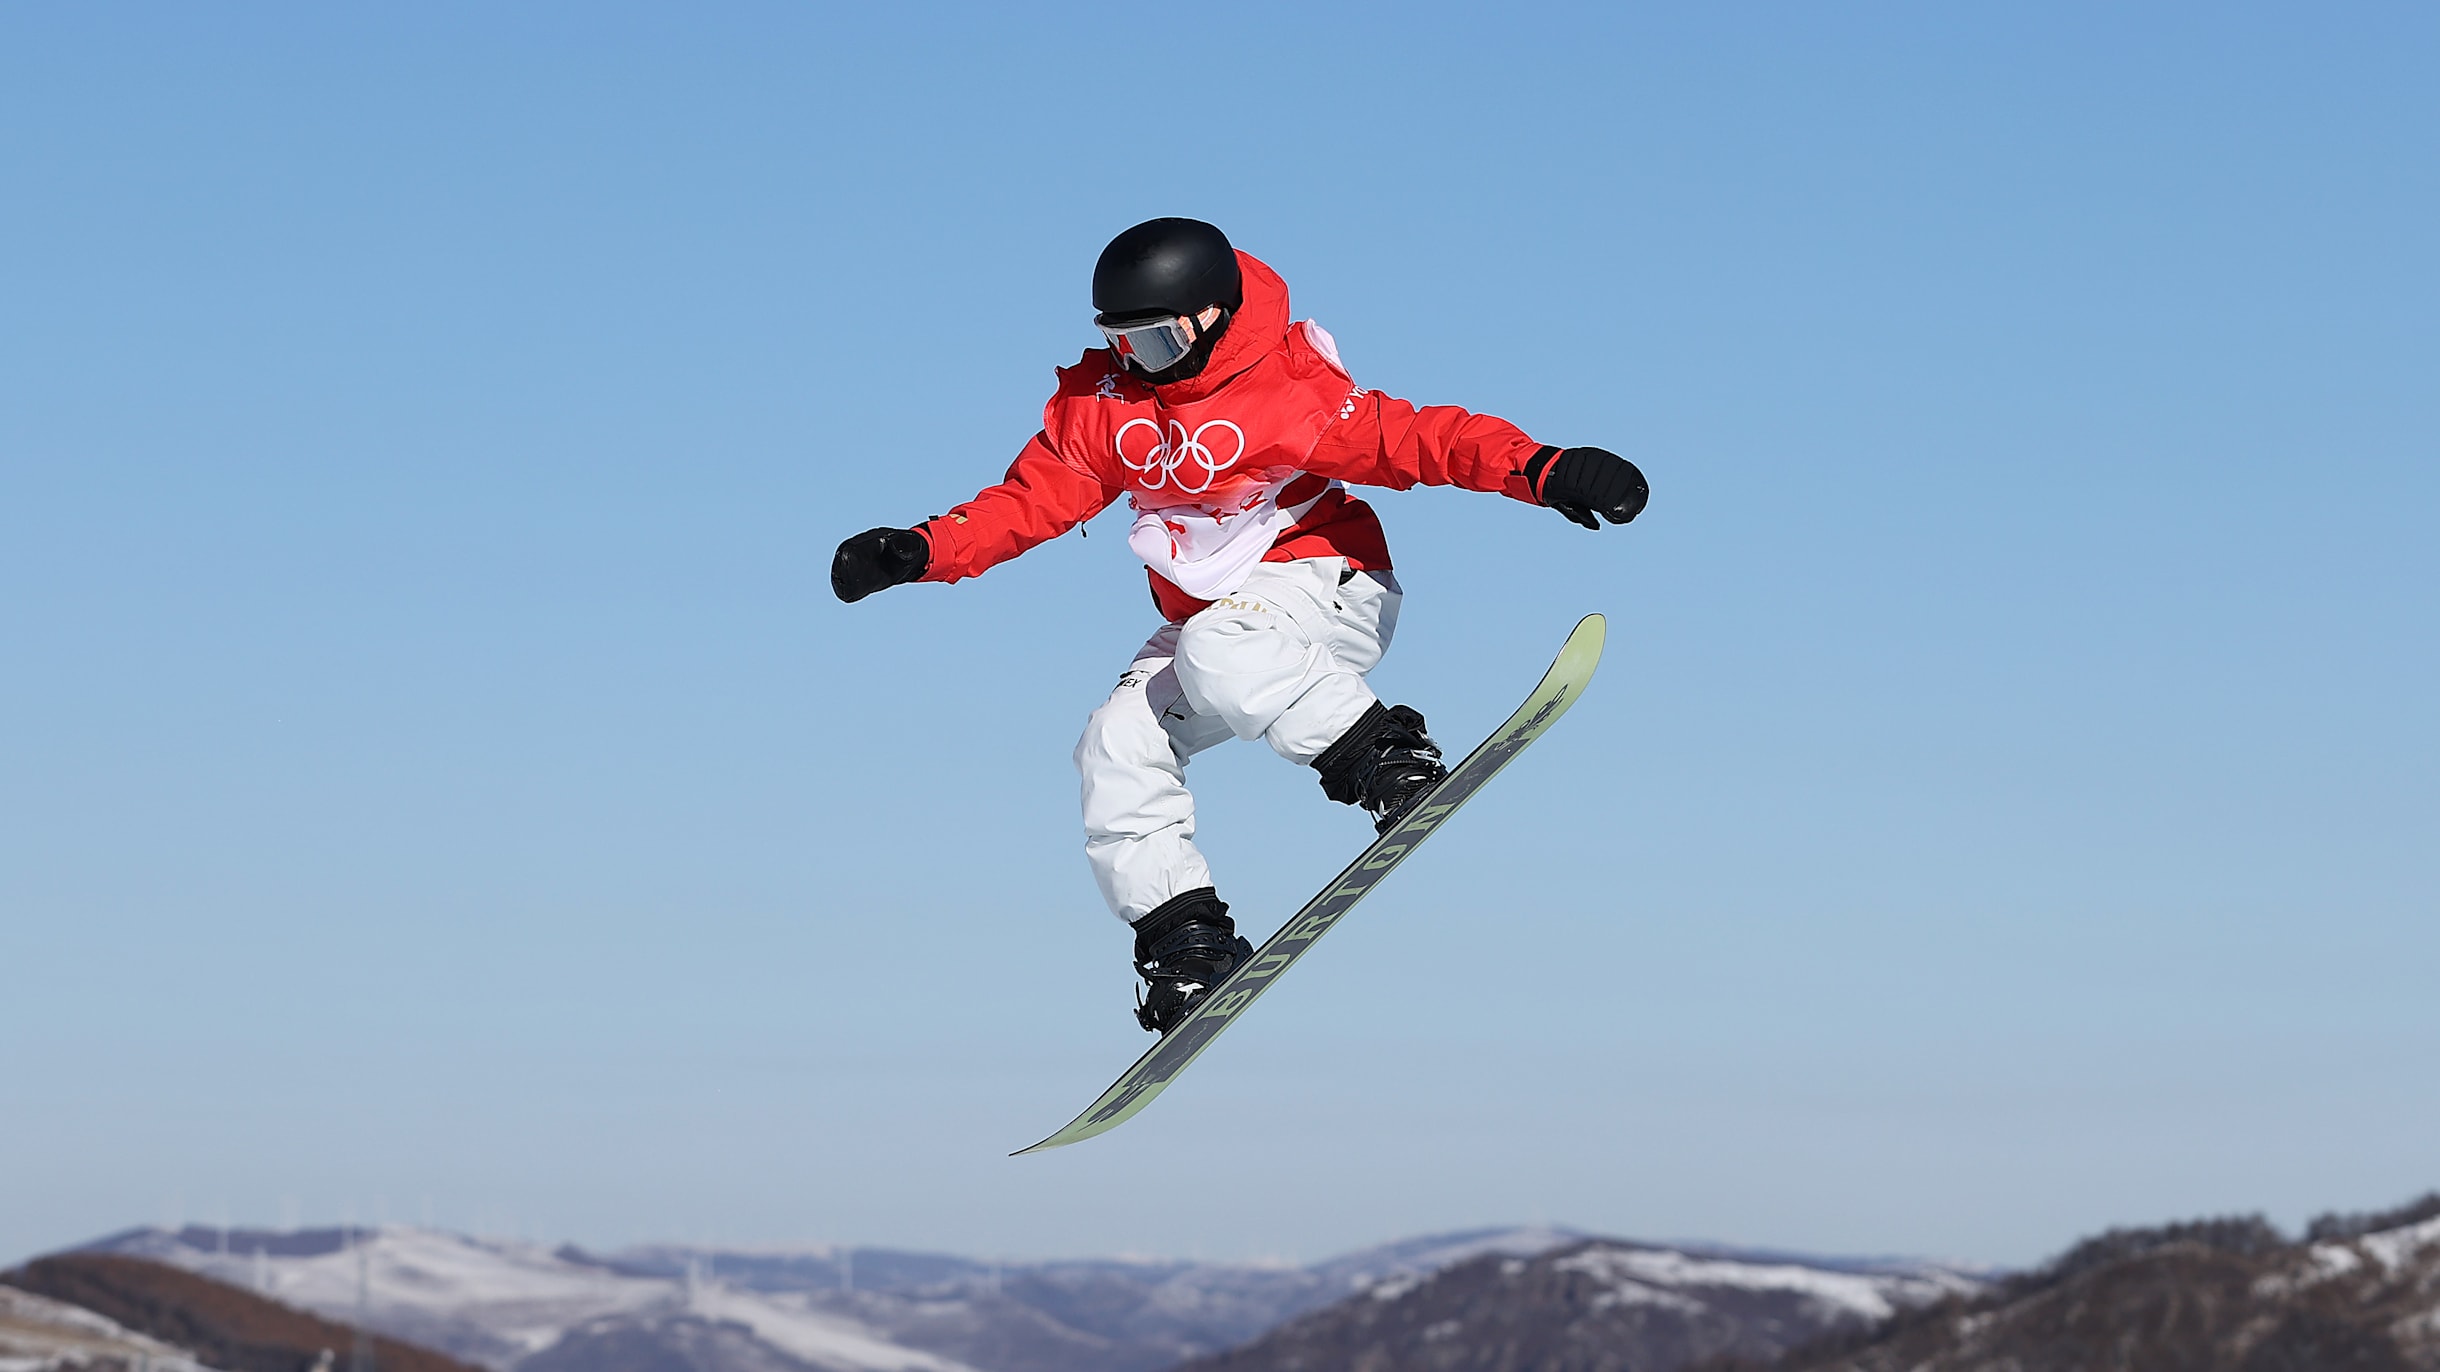 snowboarding olympics 2022 live